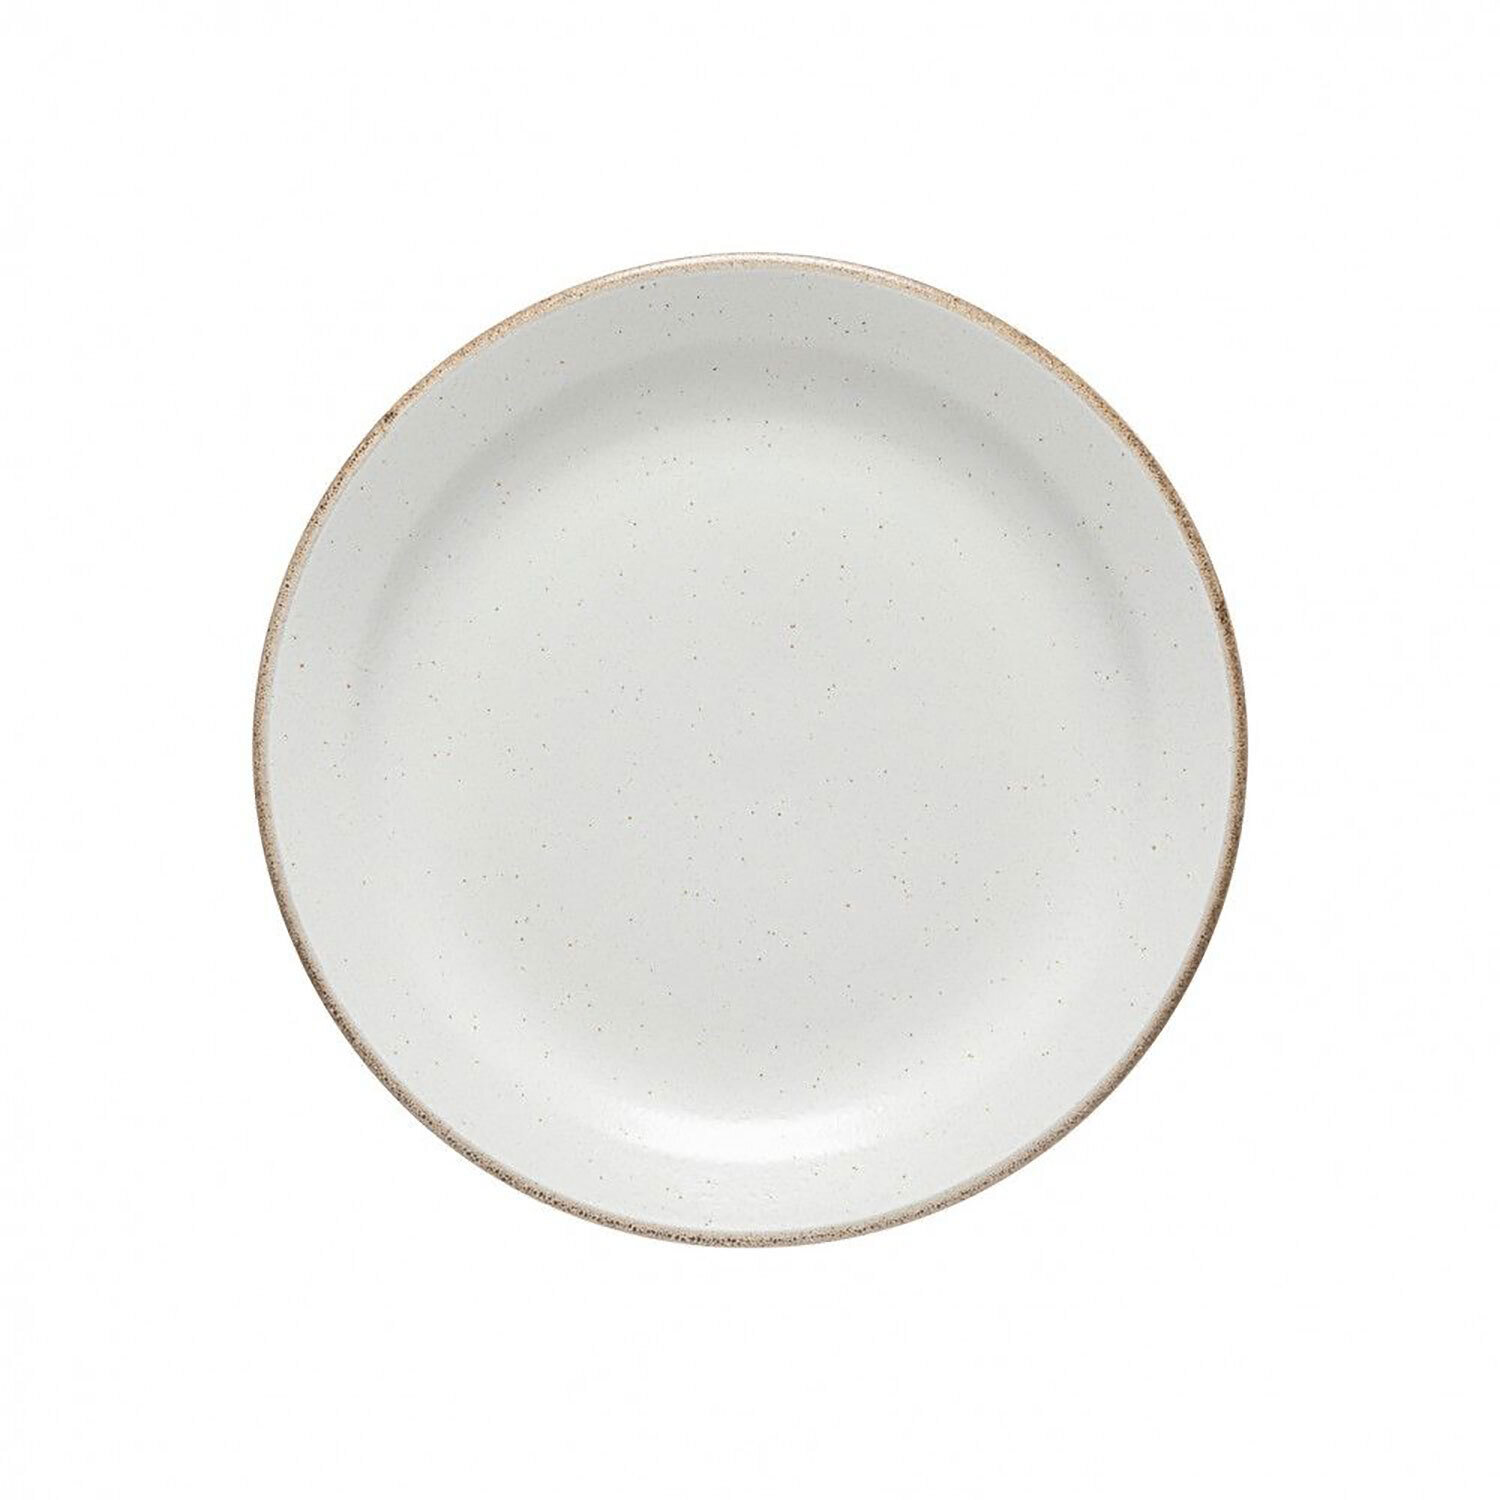 Casafina Positano White Dinner Plate 11 Inch Set of 6 XCP281-WHI